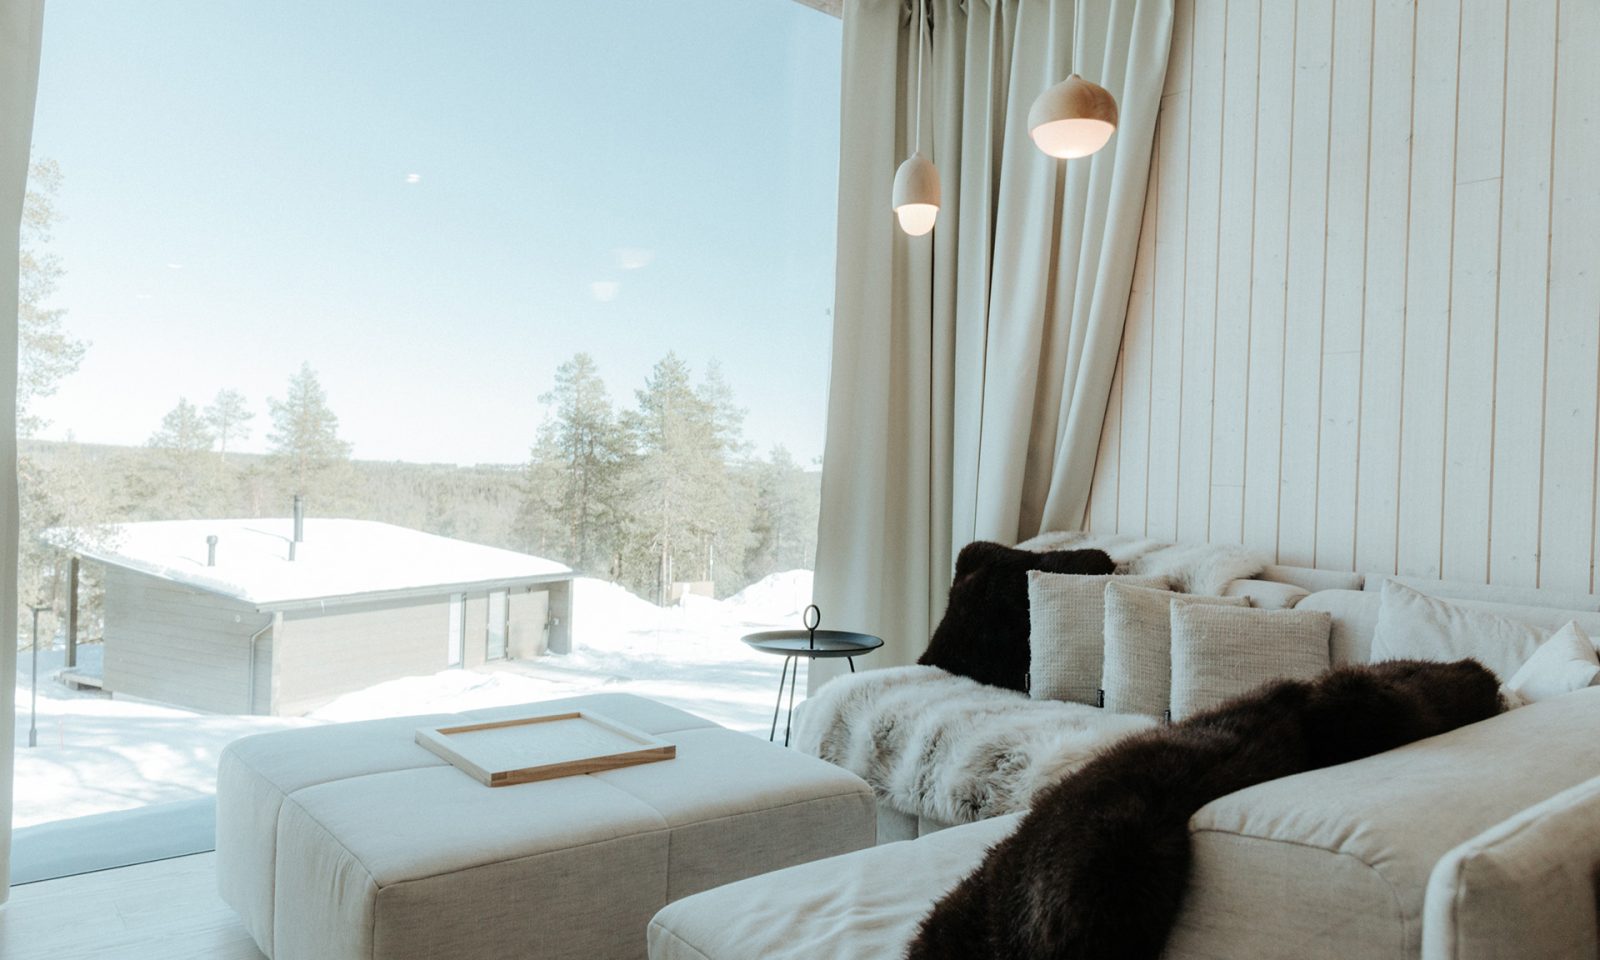 Arctic Scene Executive Suites Lounge Area and panoramic window.